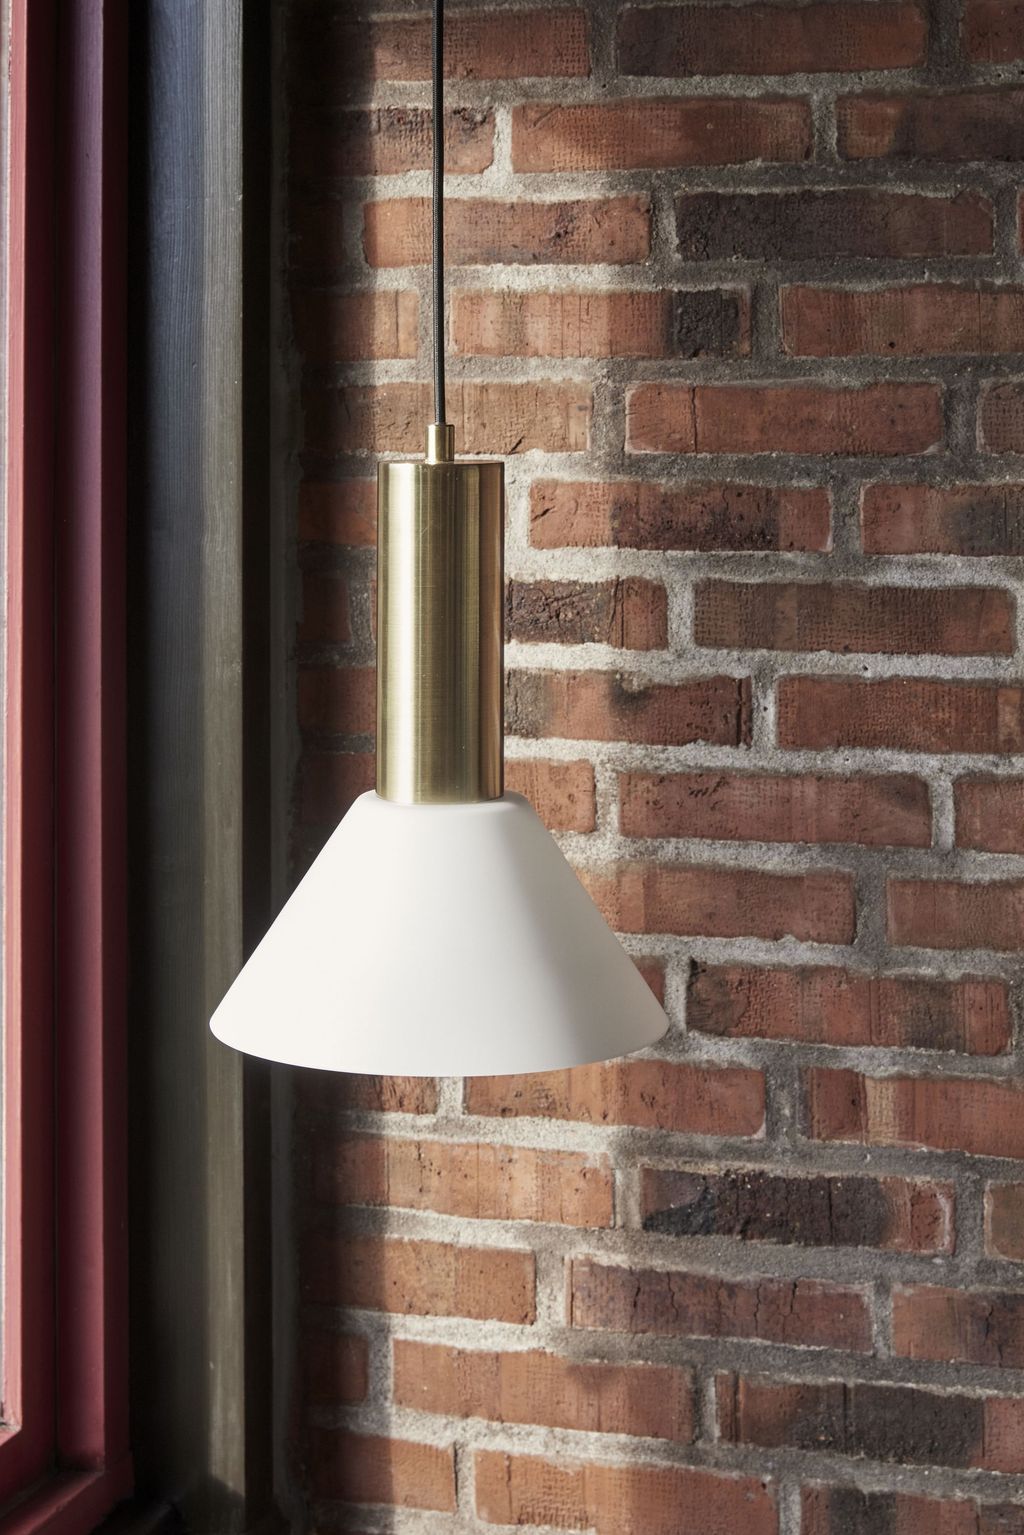 Hübsch Contrast Pendant /Ceiling Lamp, Burnished Brass